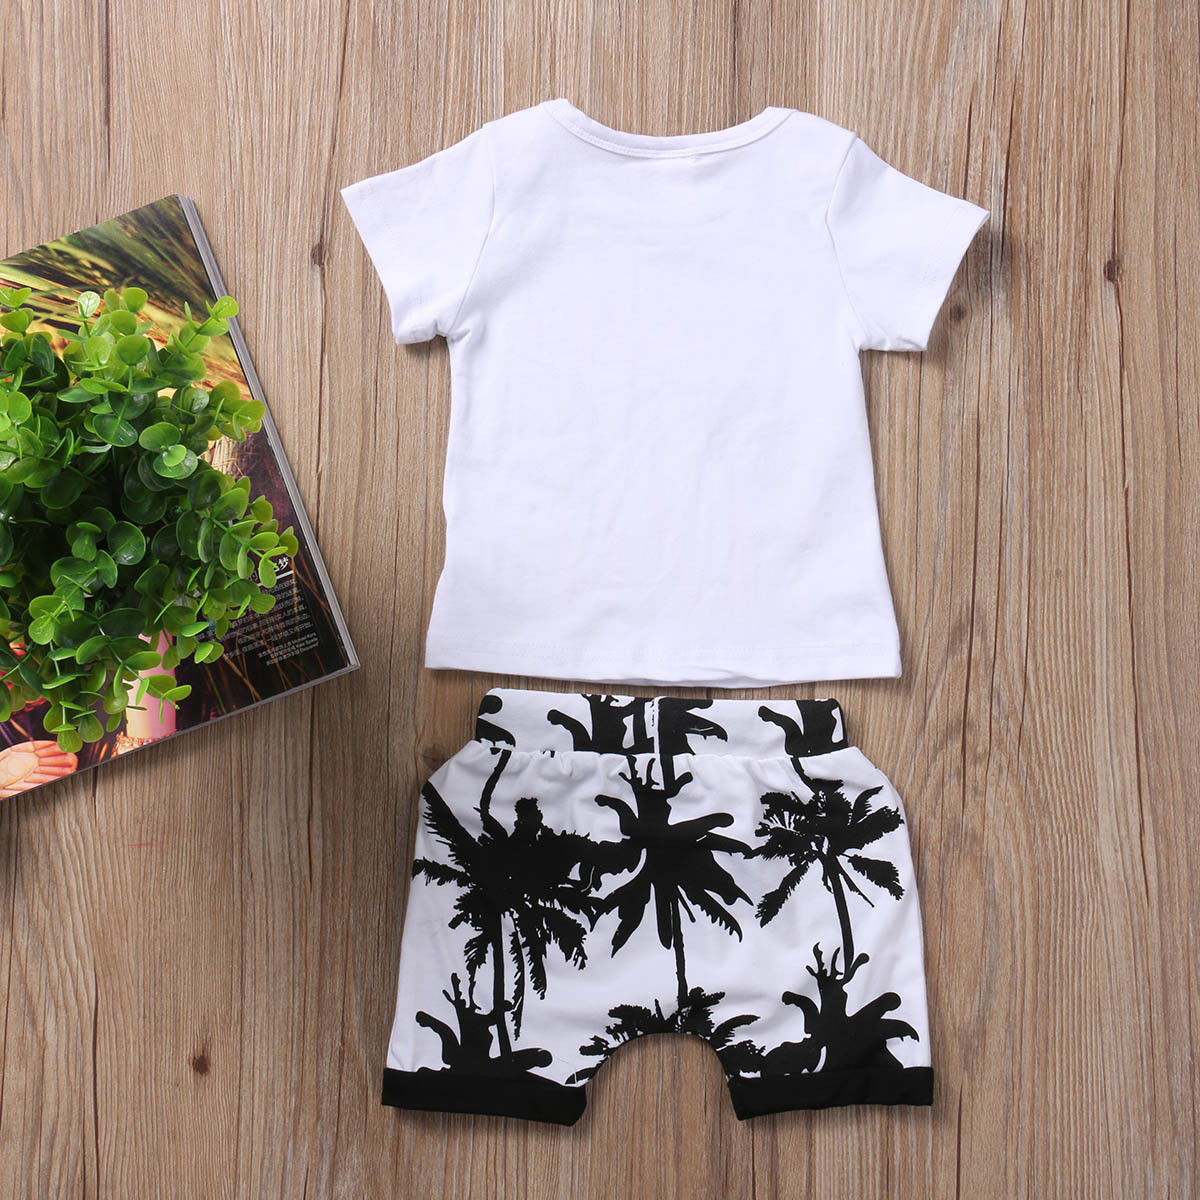 Toddler Baby Boy Short Sleeve T-shirt Tops+Short Pants Shorts Clothes Set 0-3T 2Pcs Outfit - ebowsos